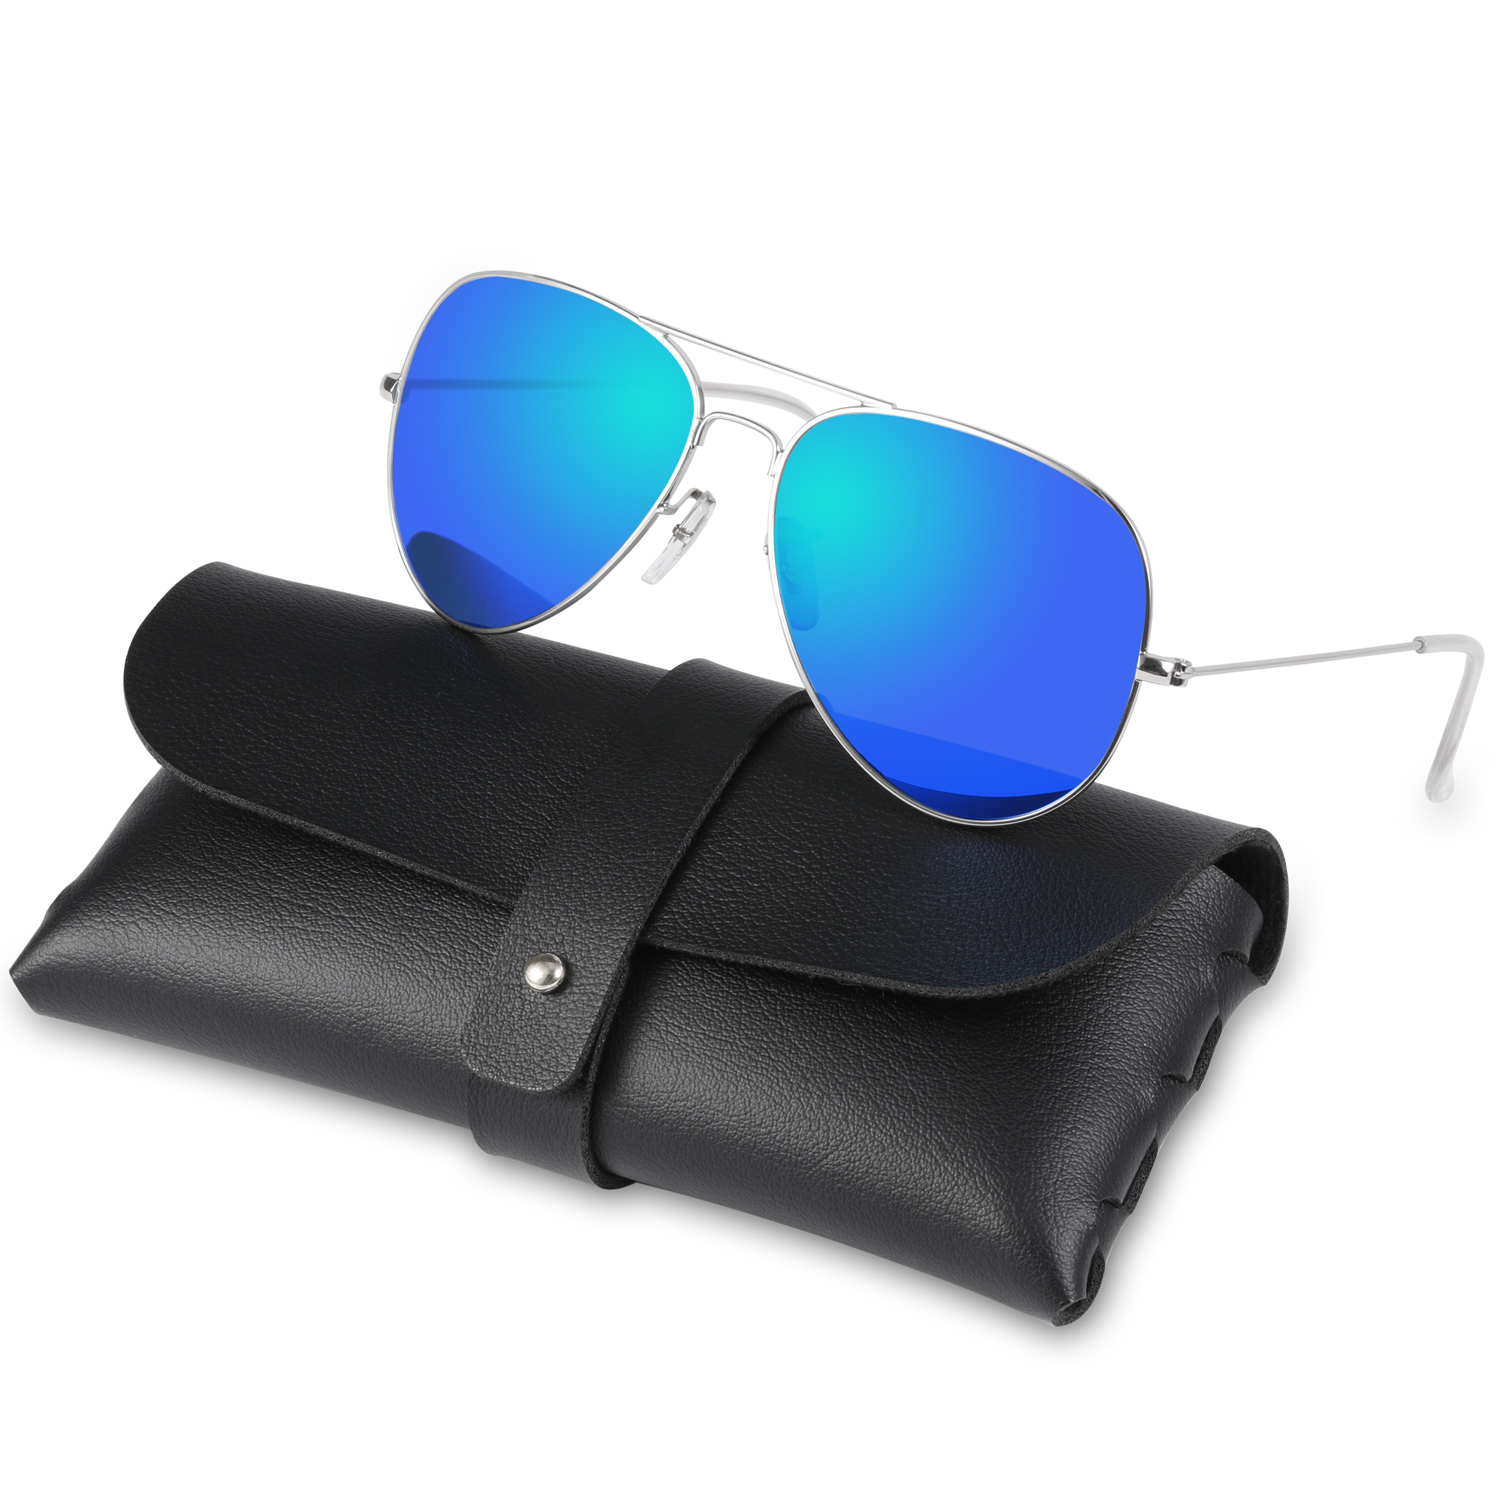 Stylish Blue] Womens eBay Lens Aviator Sunglasses Polarized Protection, UV | Mirrored